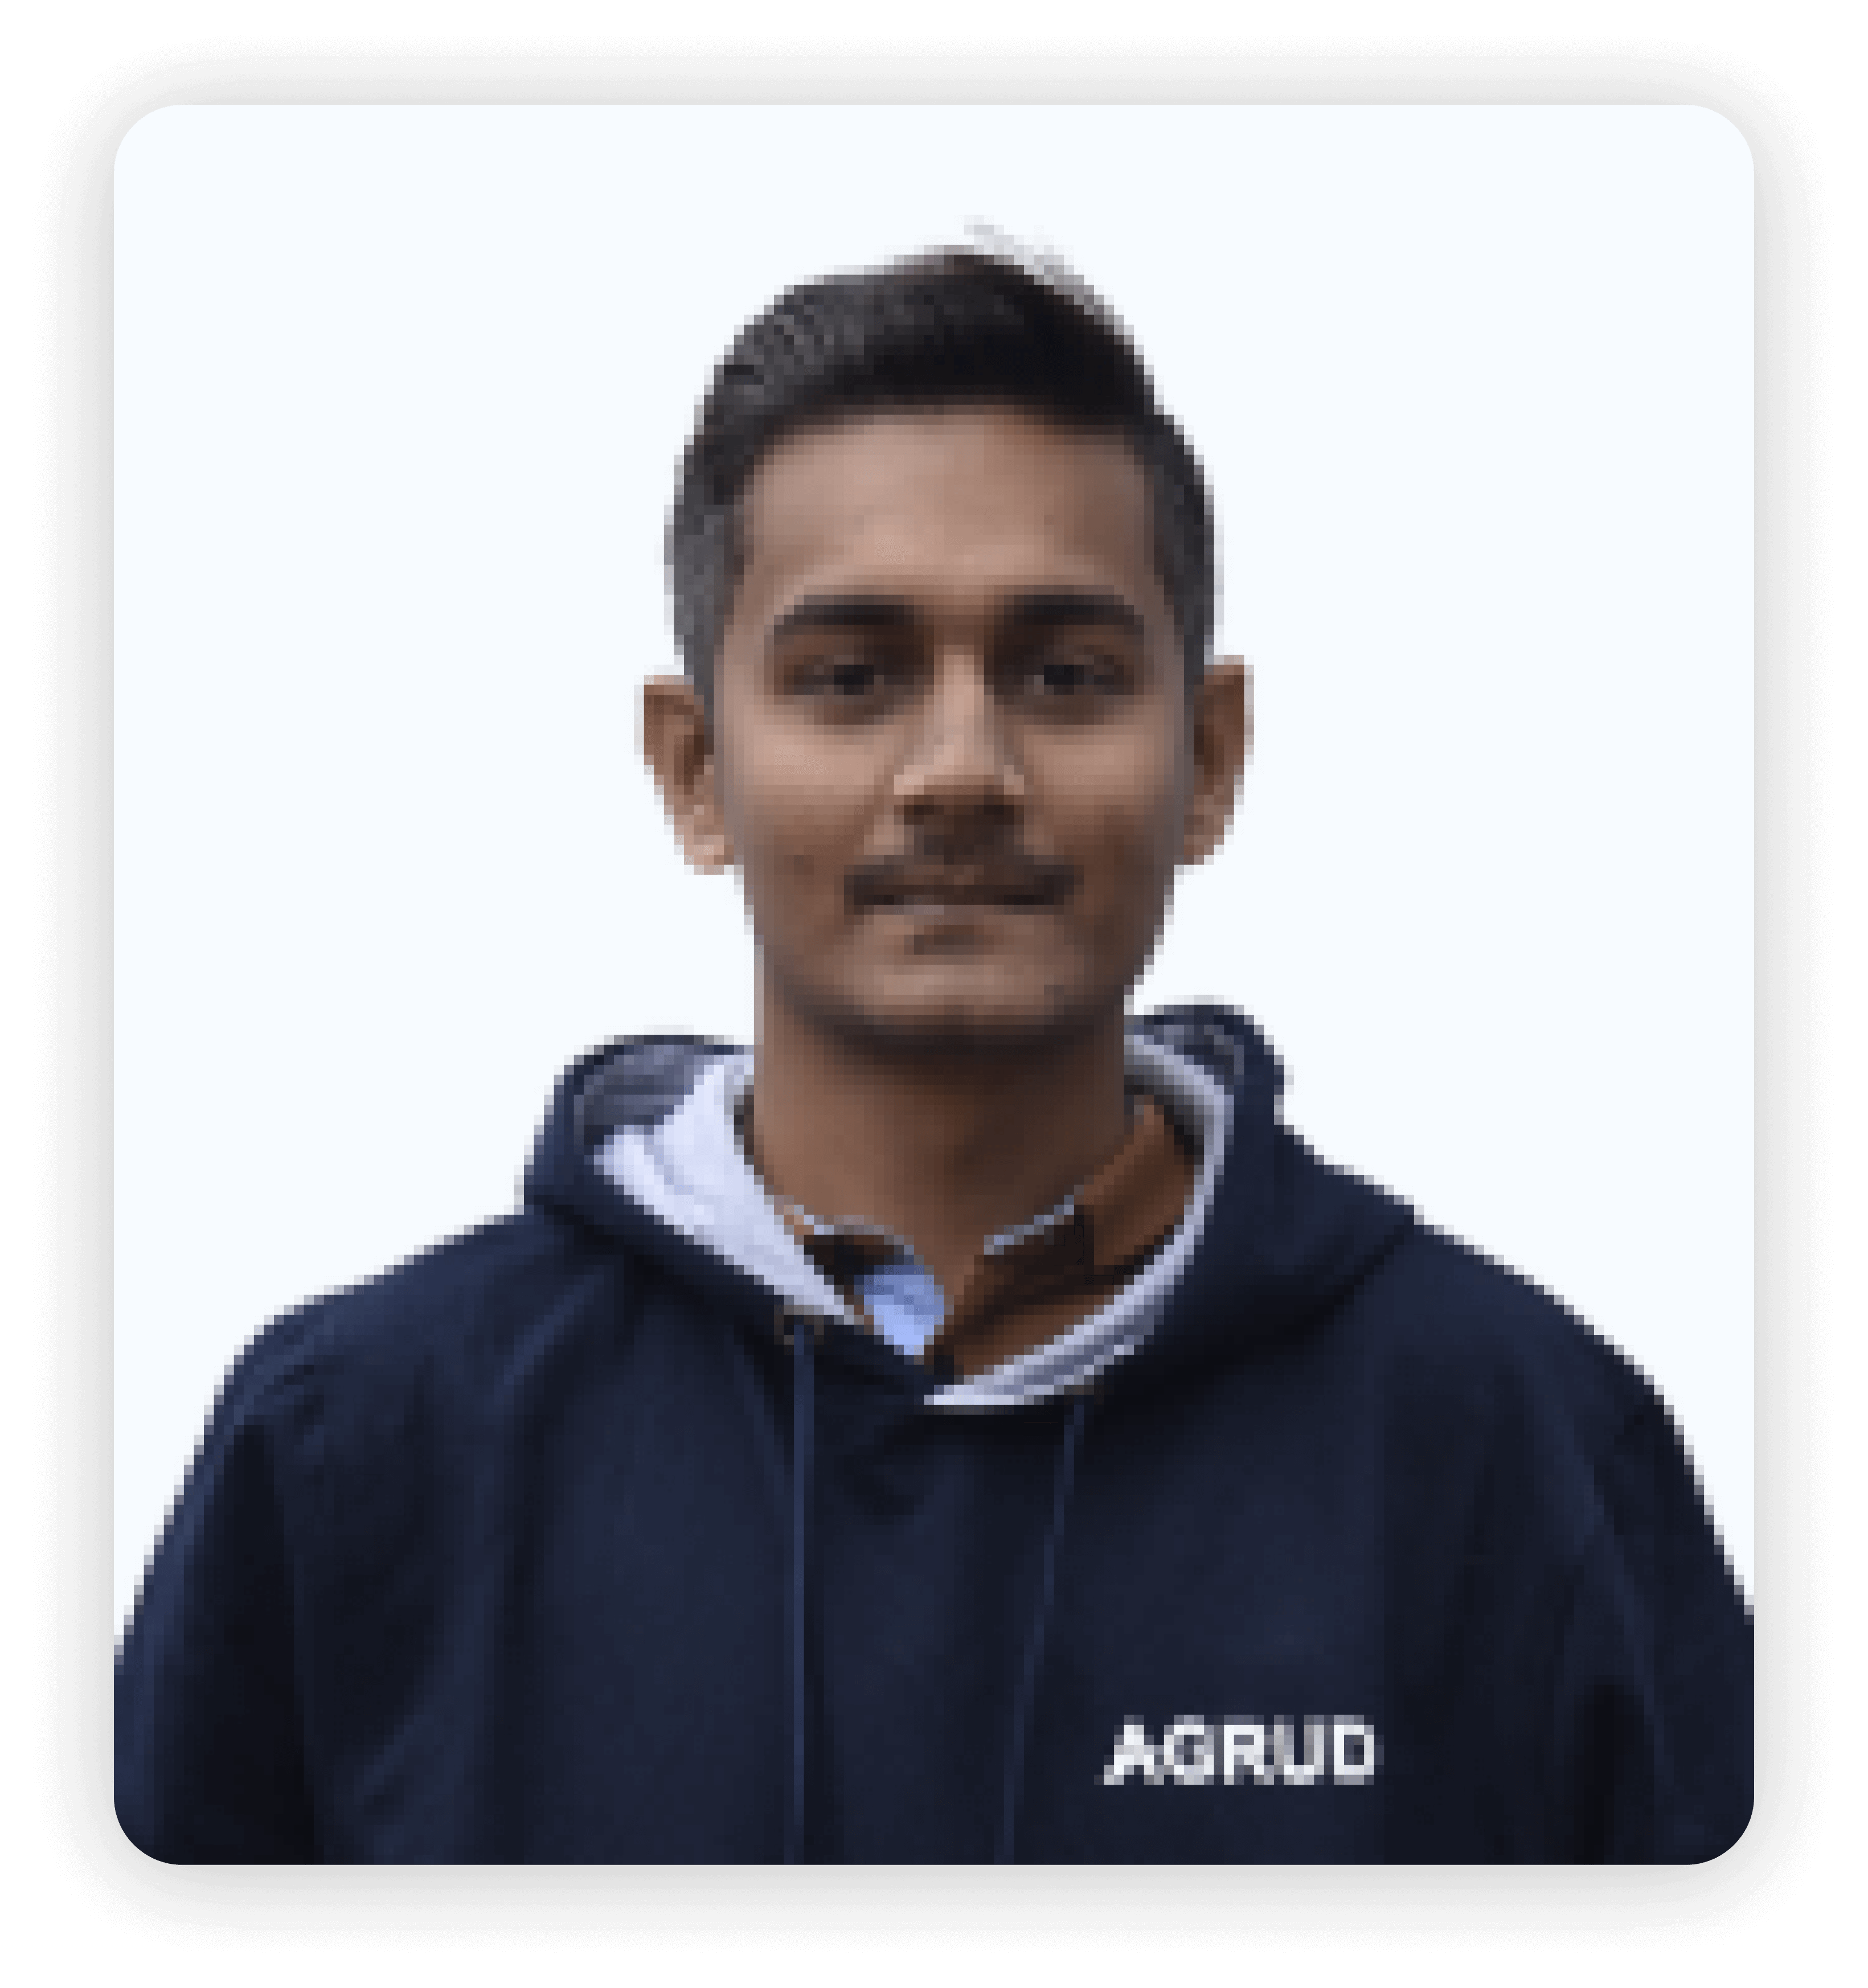 Parth Kalsariya - Web Designer at Agrud Technologies